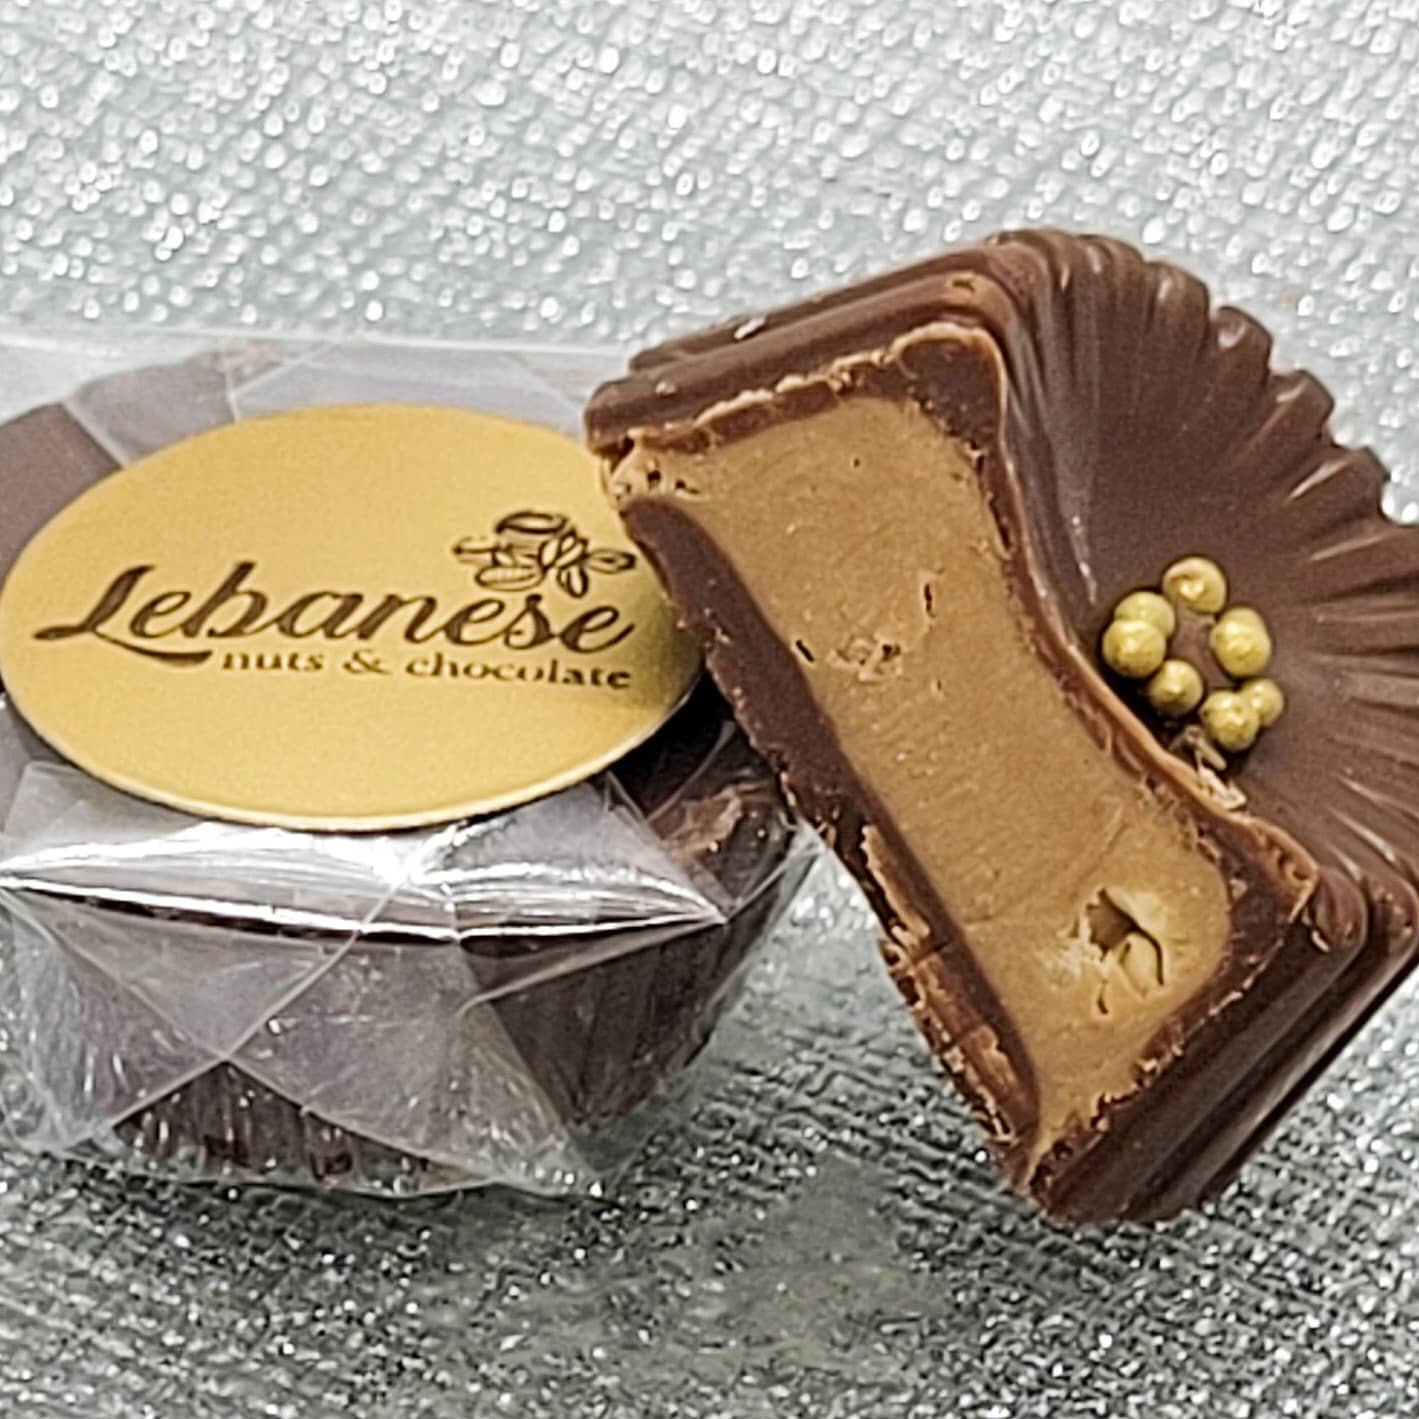 Chocolate Peanut Butter/شوكولا بينت بتر حلو